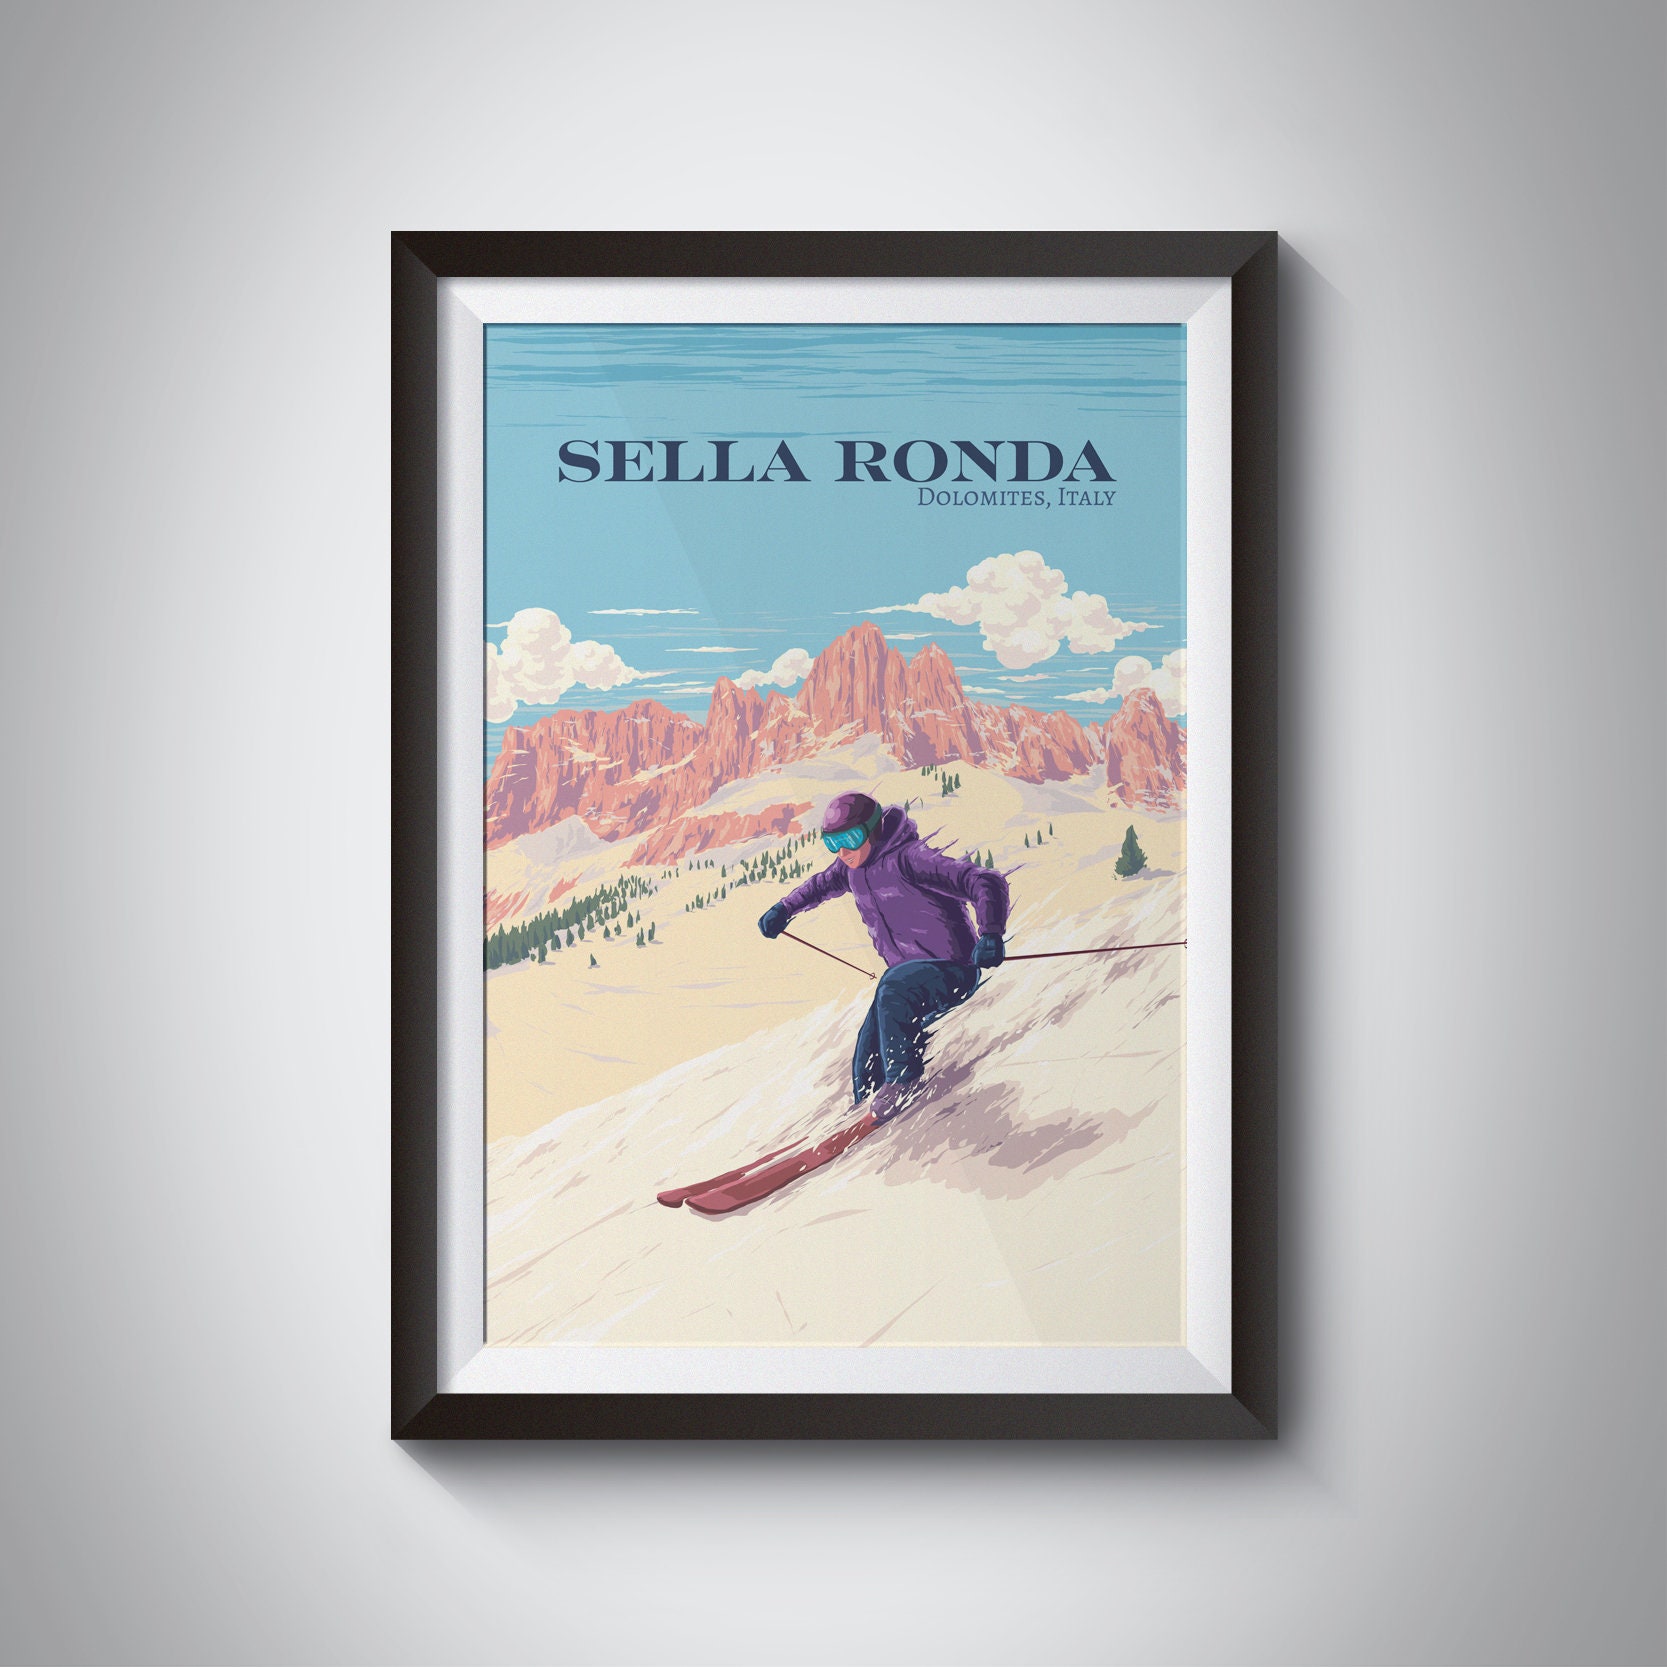 Sella Ronda Ski Circuit Poster, Italy, Italian Dolomites, Val